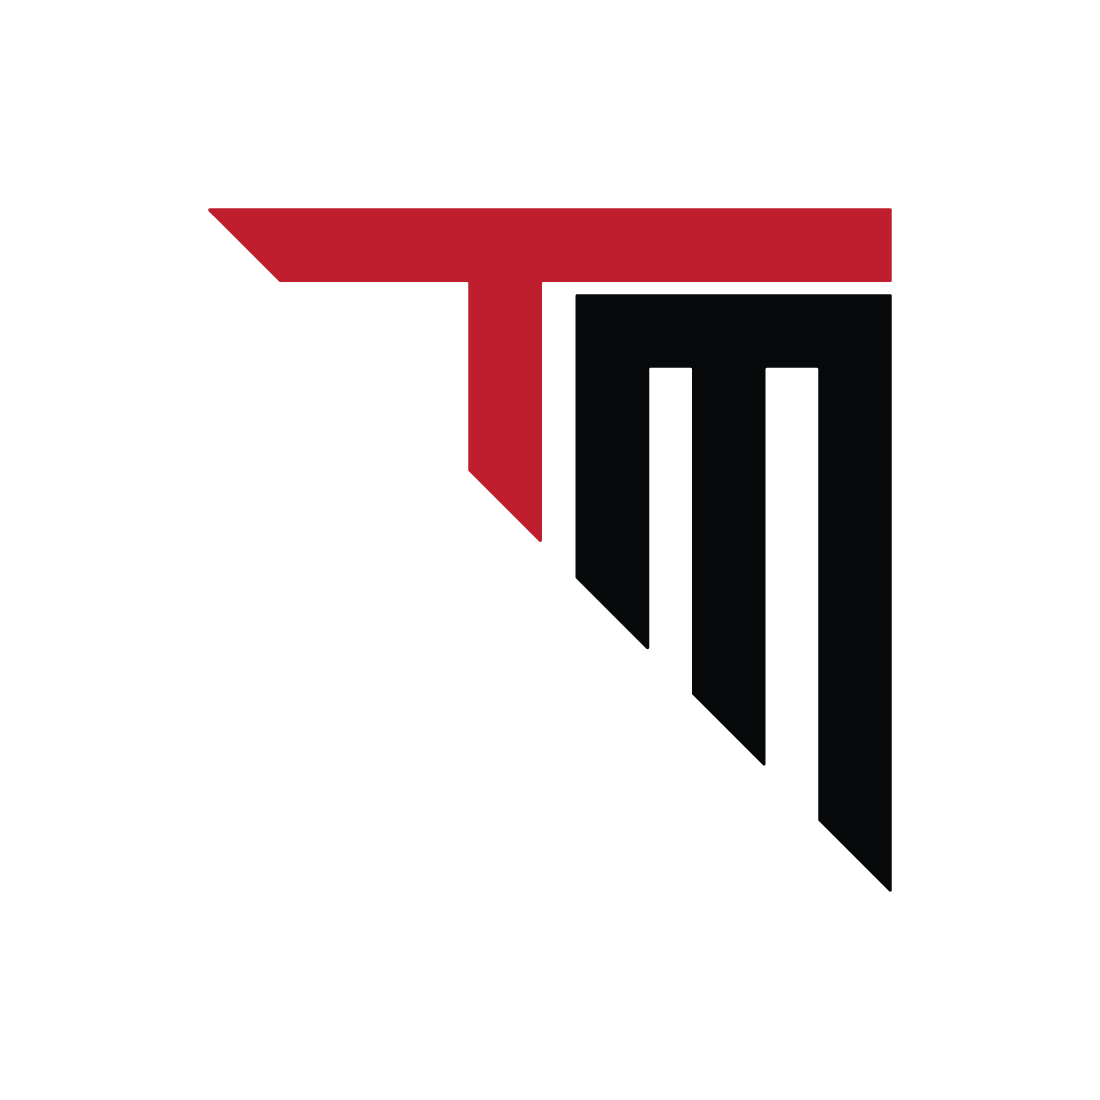 Initials TM logo design TM letters logo design vector template images design MT logo black and red color best company identity cover image.